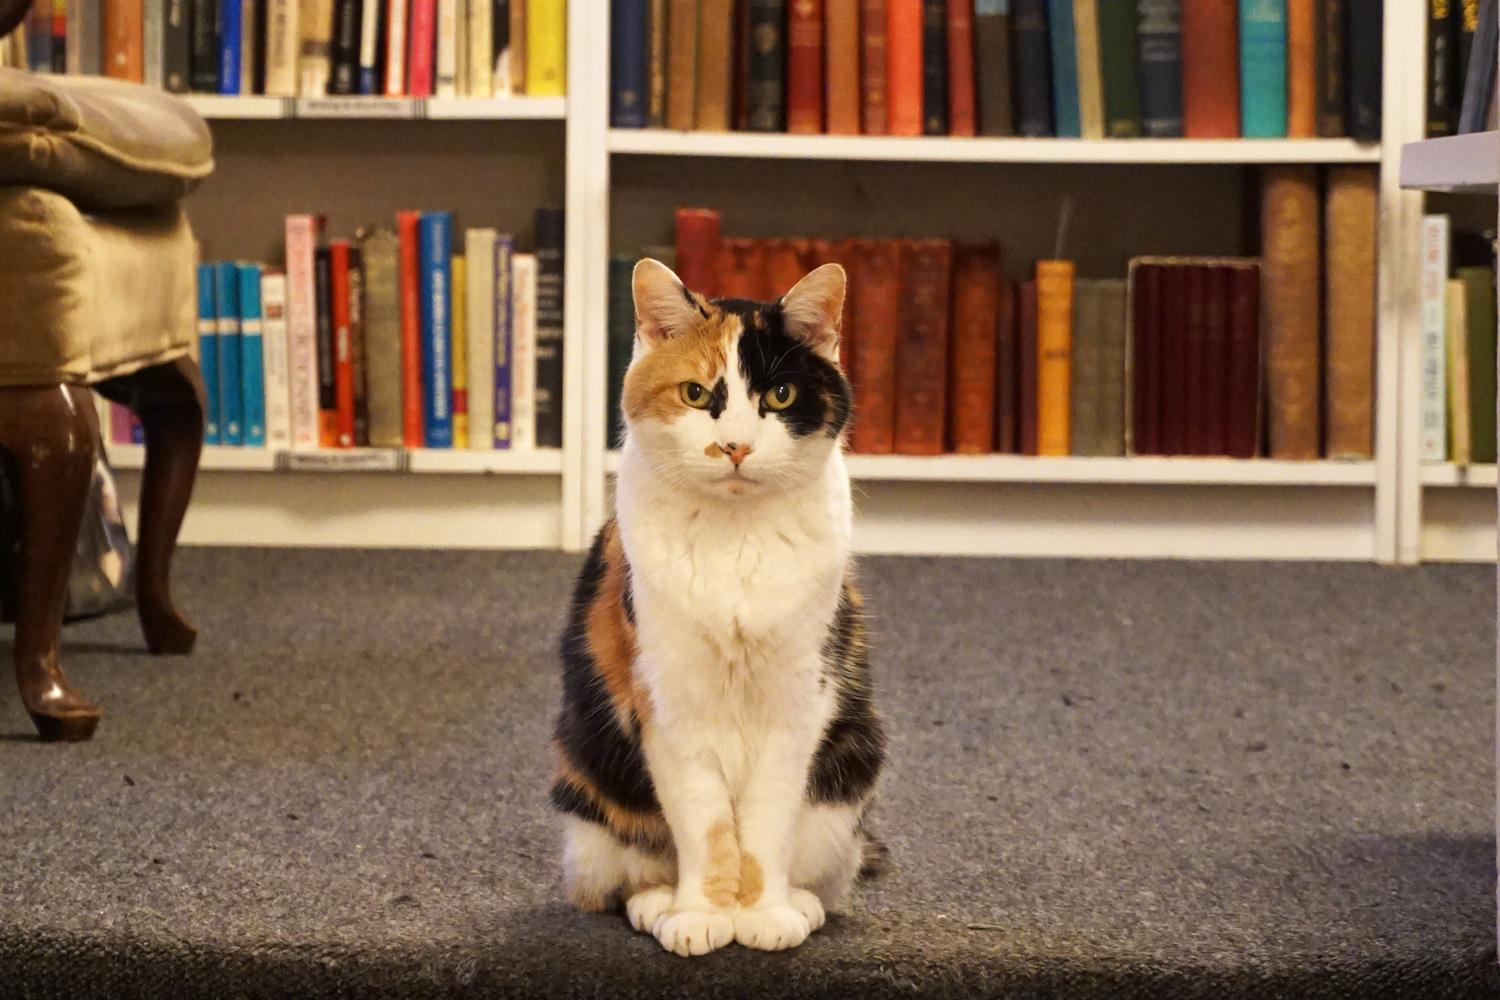 bookstorecats-sprialbookcase-amelia1.jpg